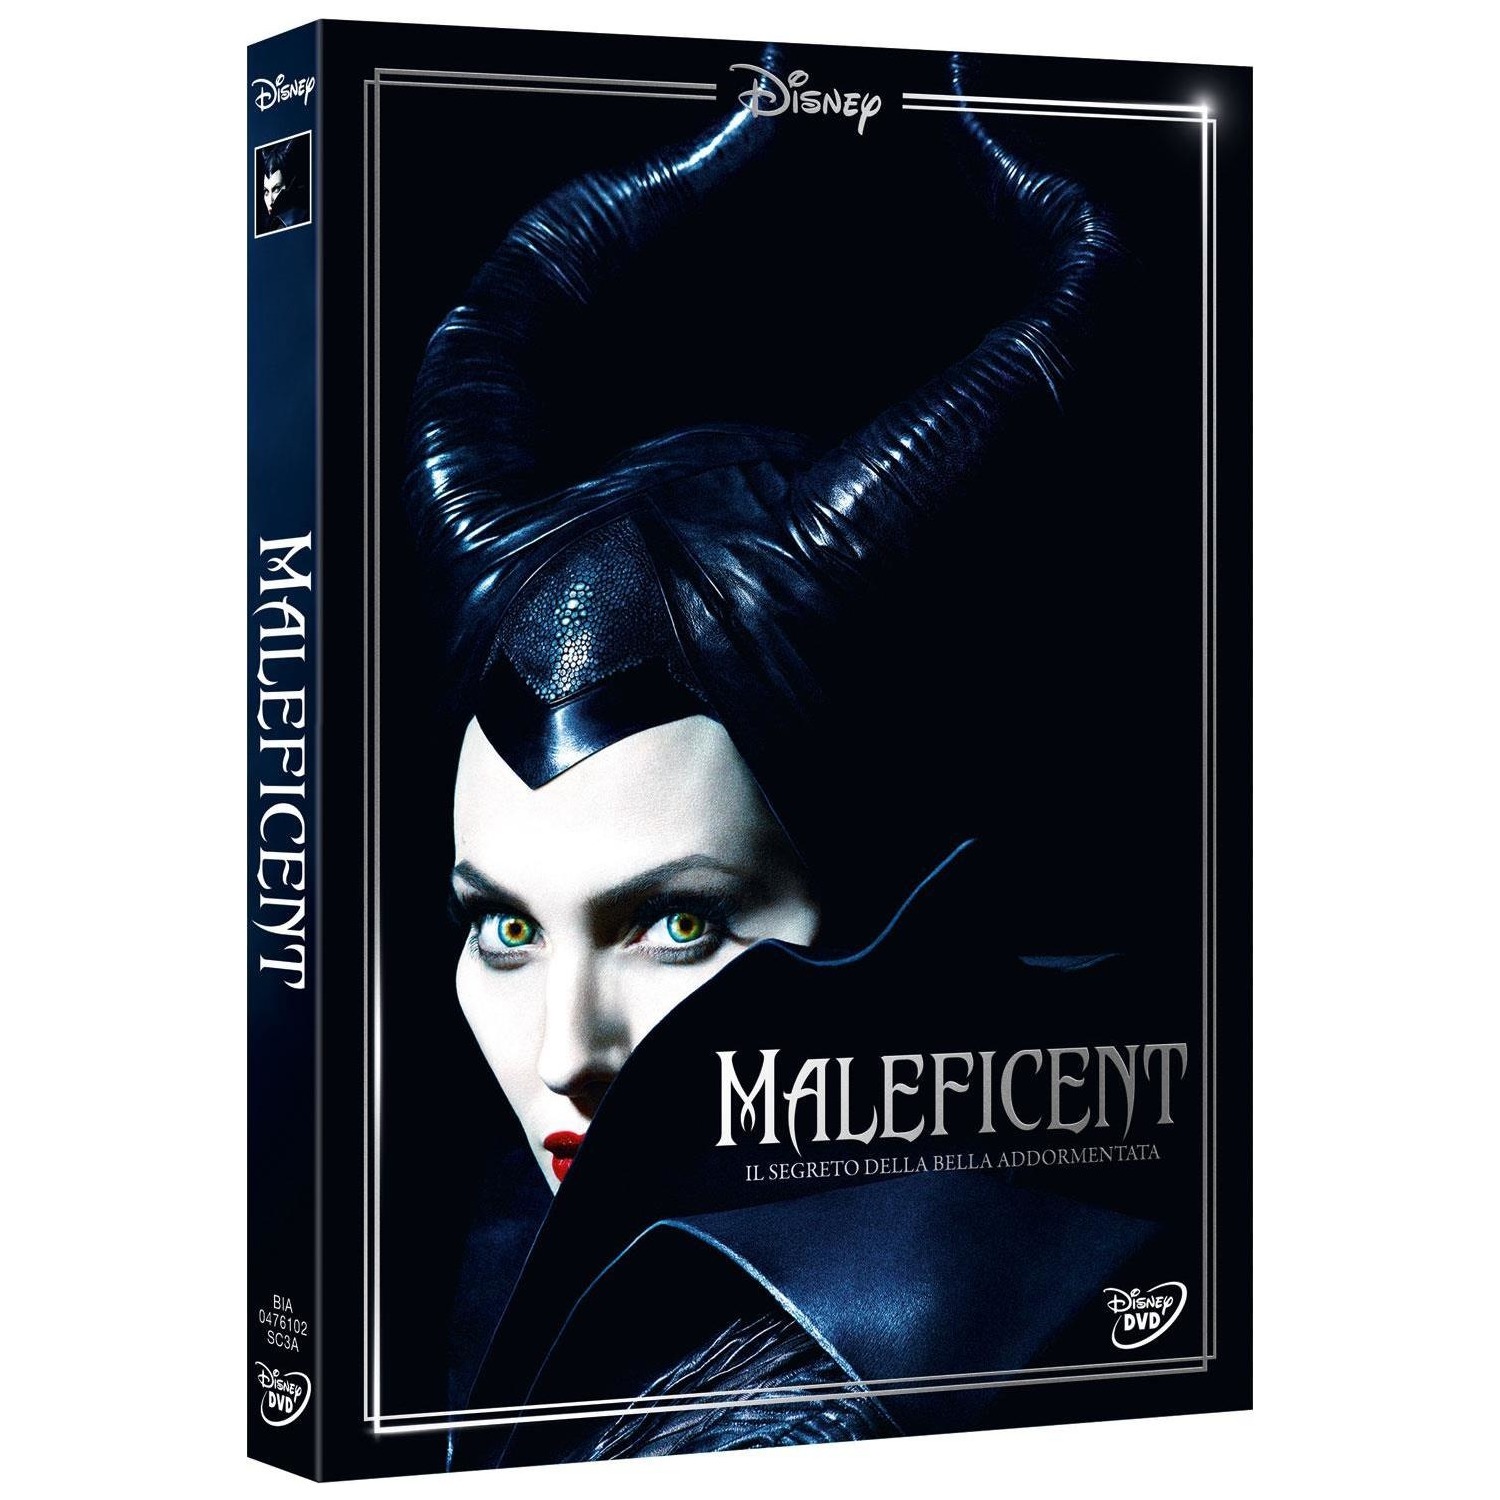 Immagine per DVD Maleficent da DIMOStore